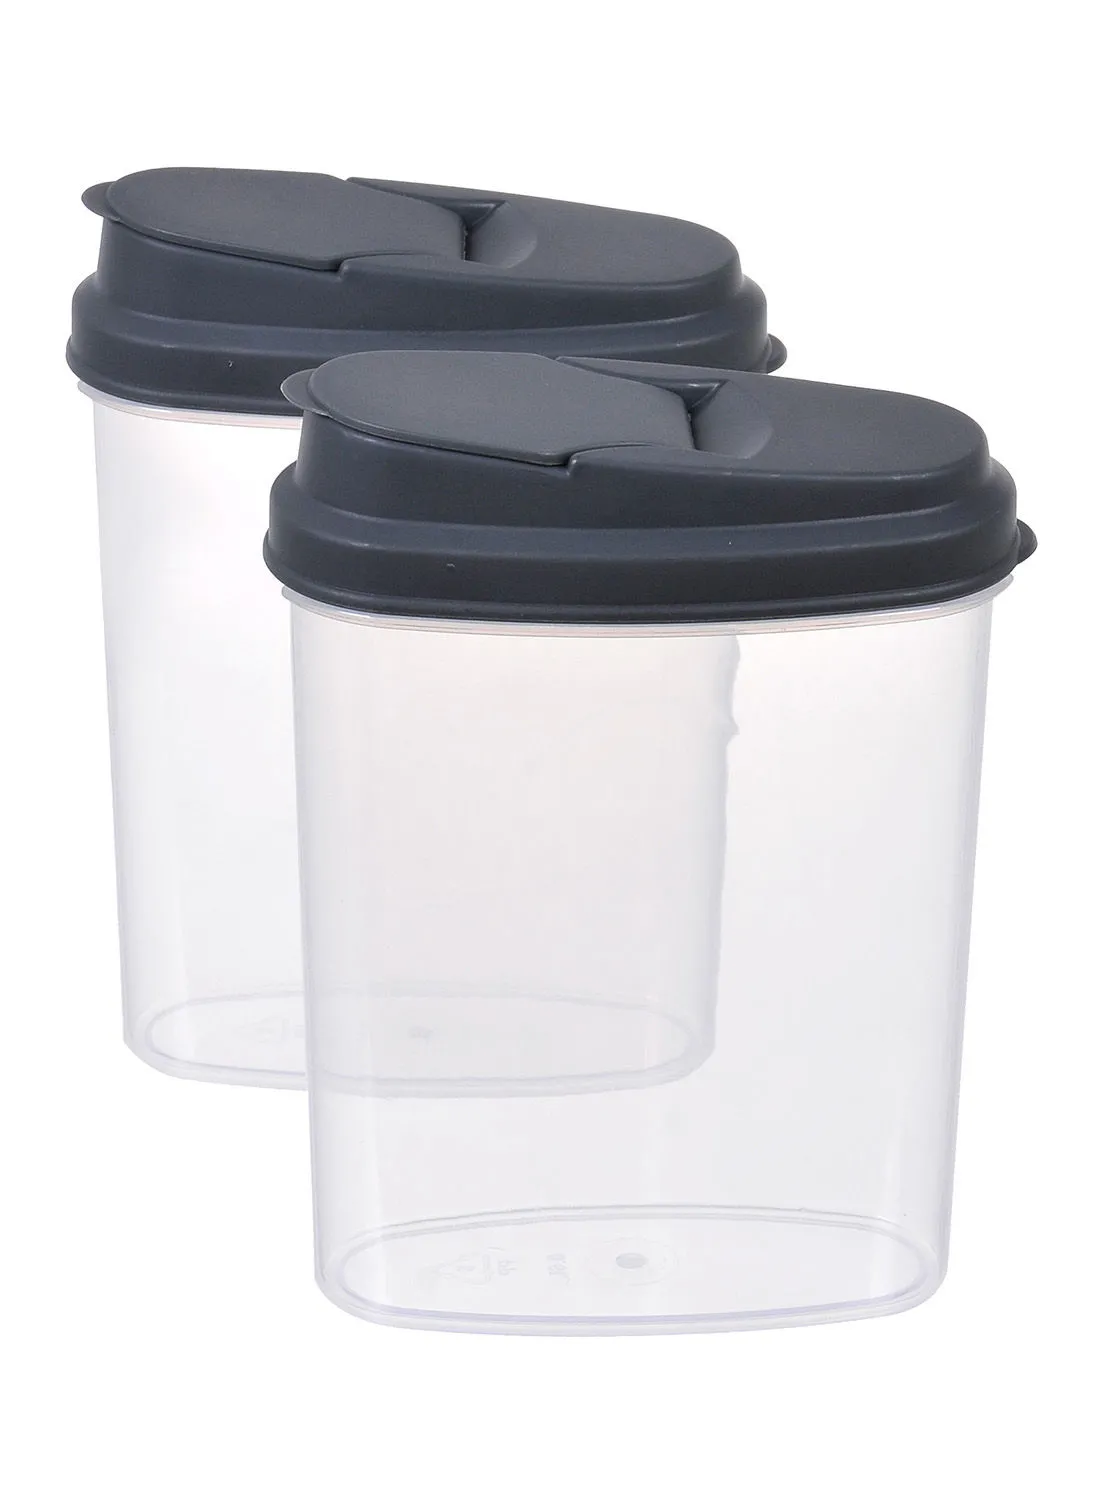 Amal 2 Piece Plastic Food Container Set - Easy Pour Lids - Food Storage Box - Storage Boxes - Kitchen Cabinet Organizers - Grey